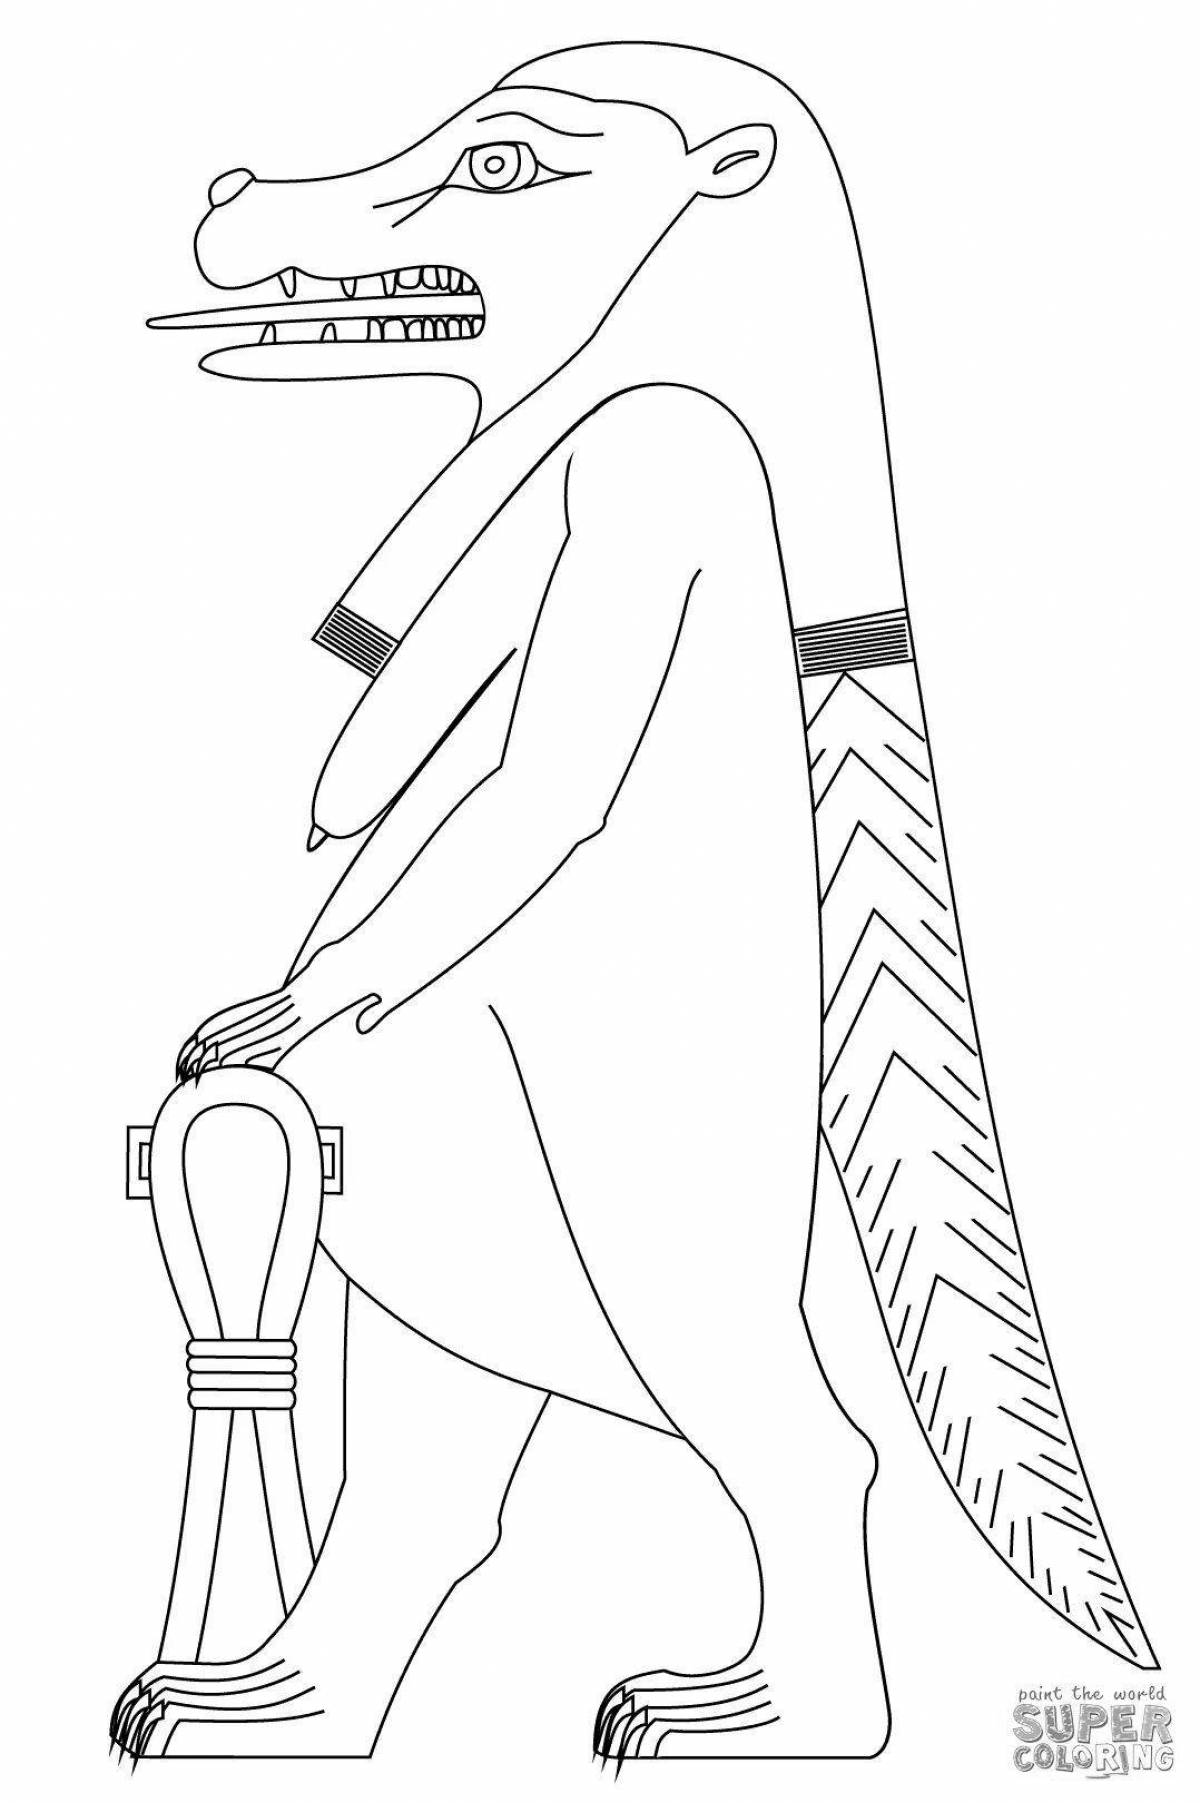 Таурт древнеегипетские Богини